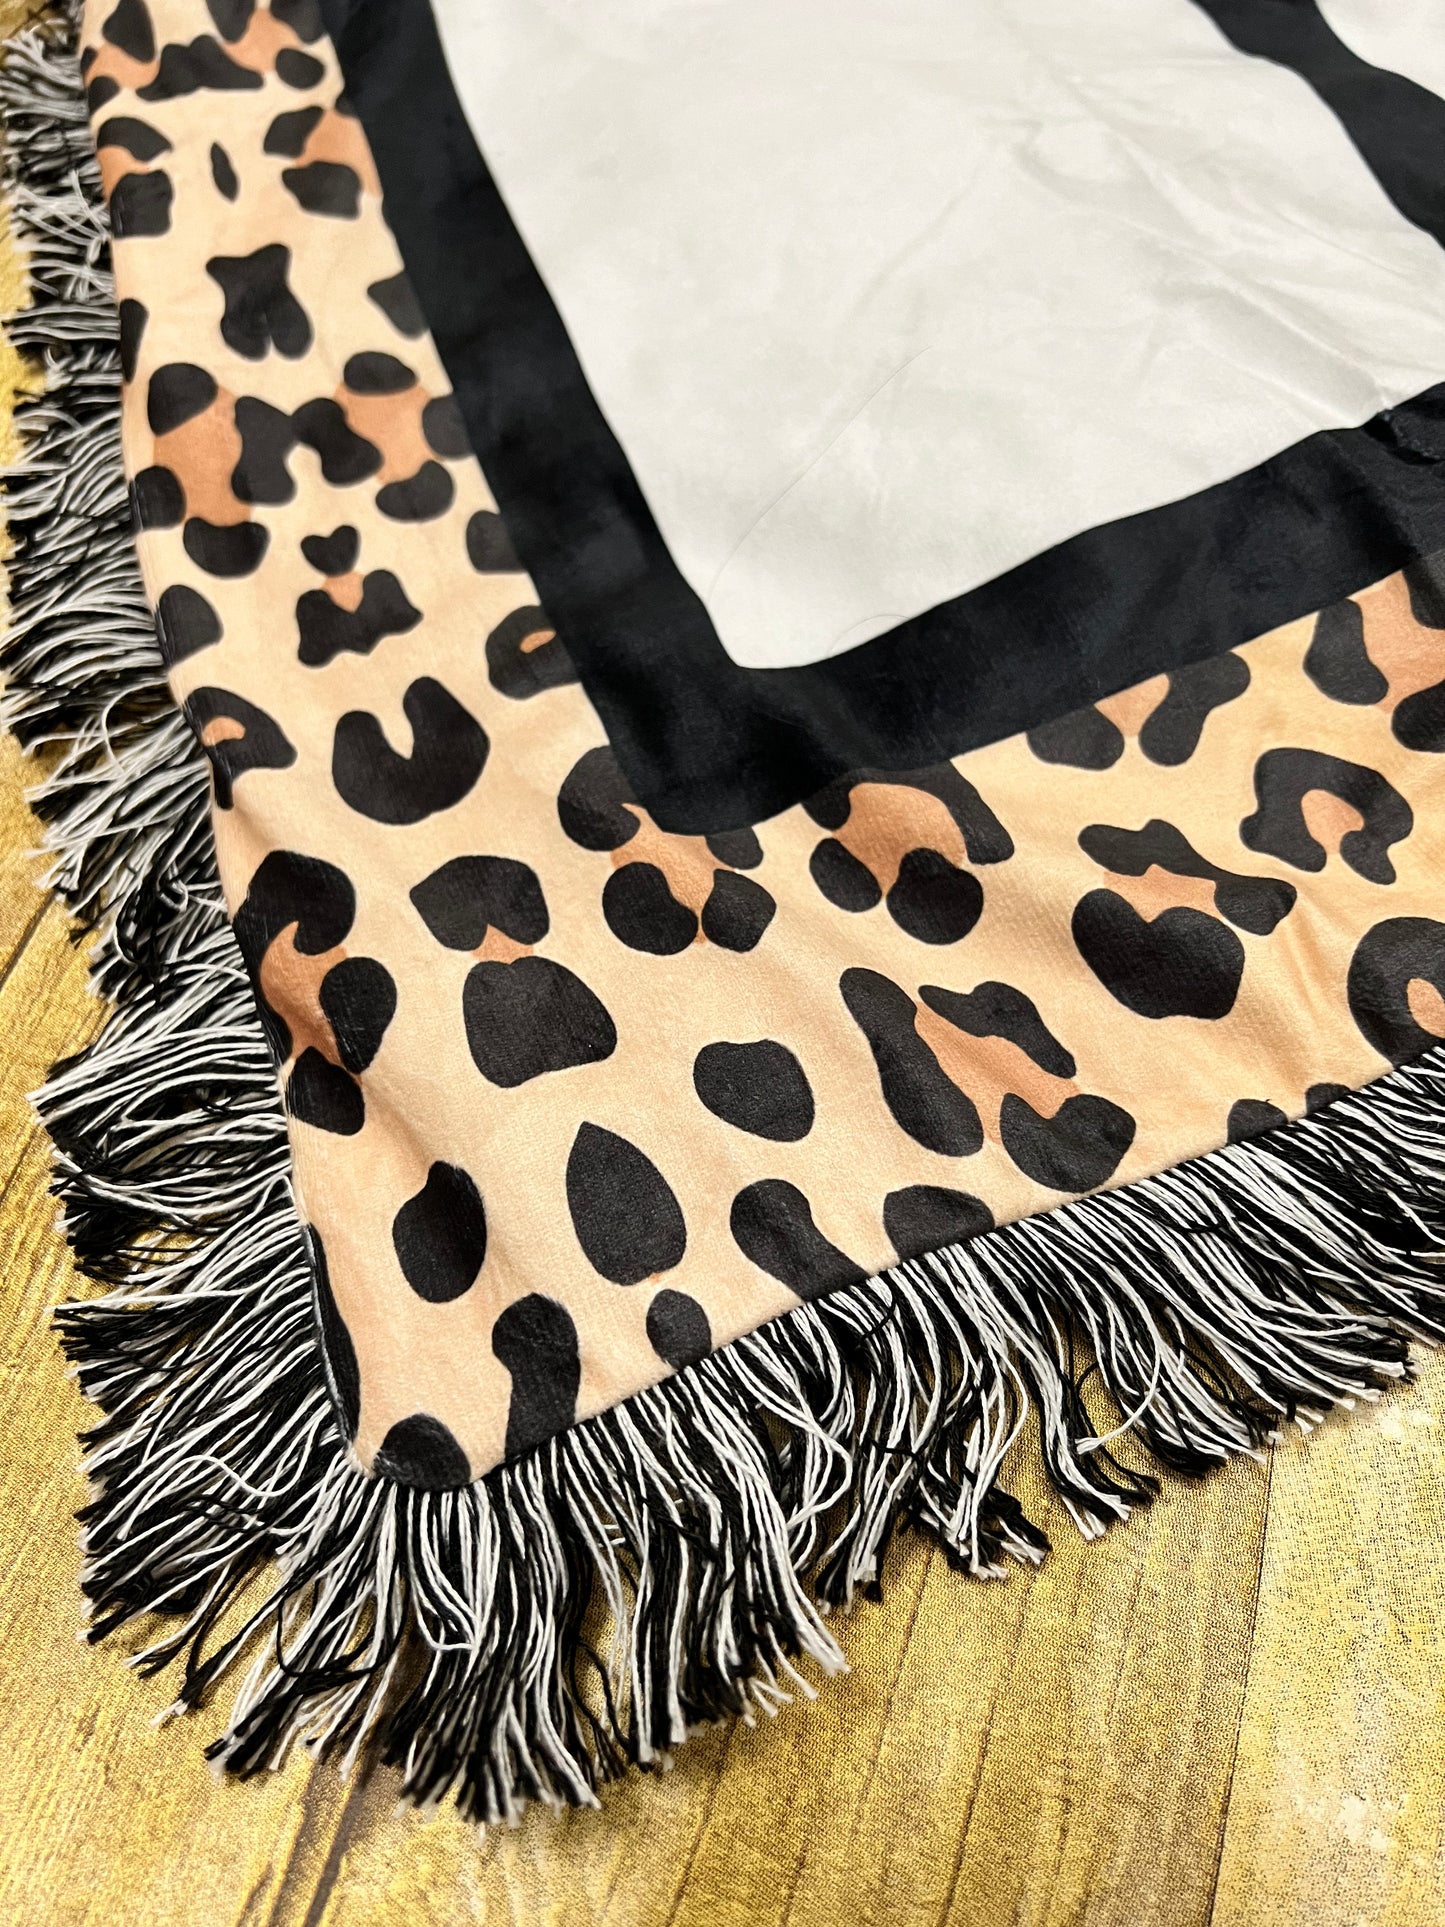 9 Photo Panel Cheetah Print Blanket